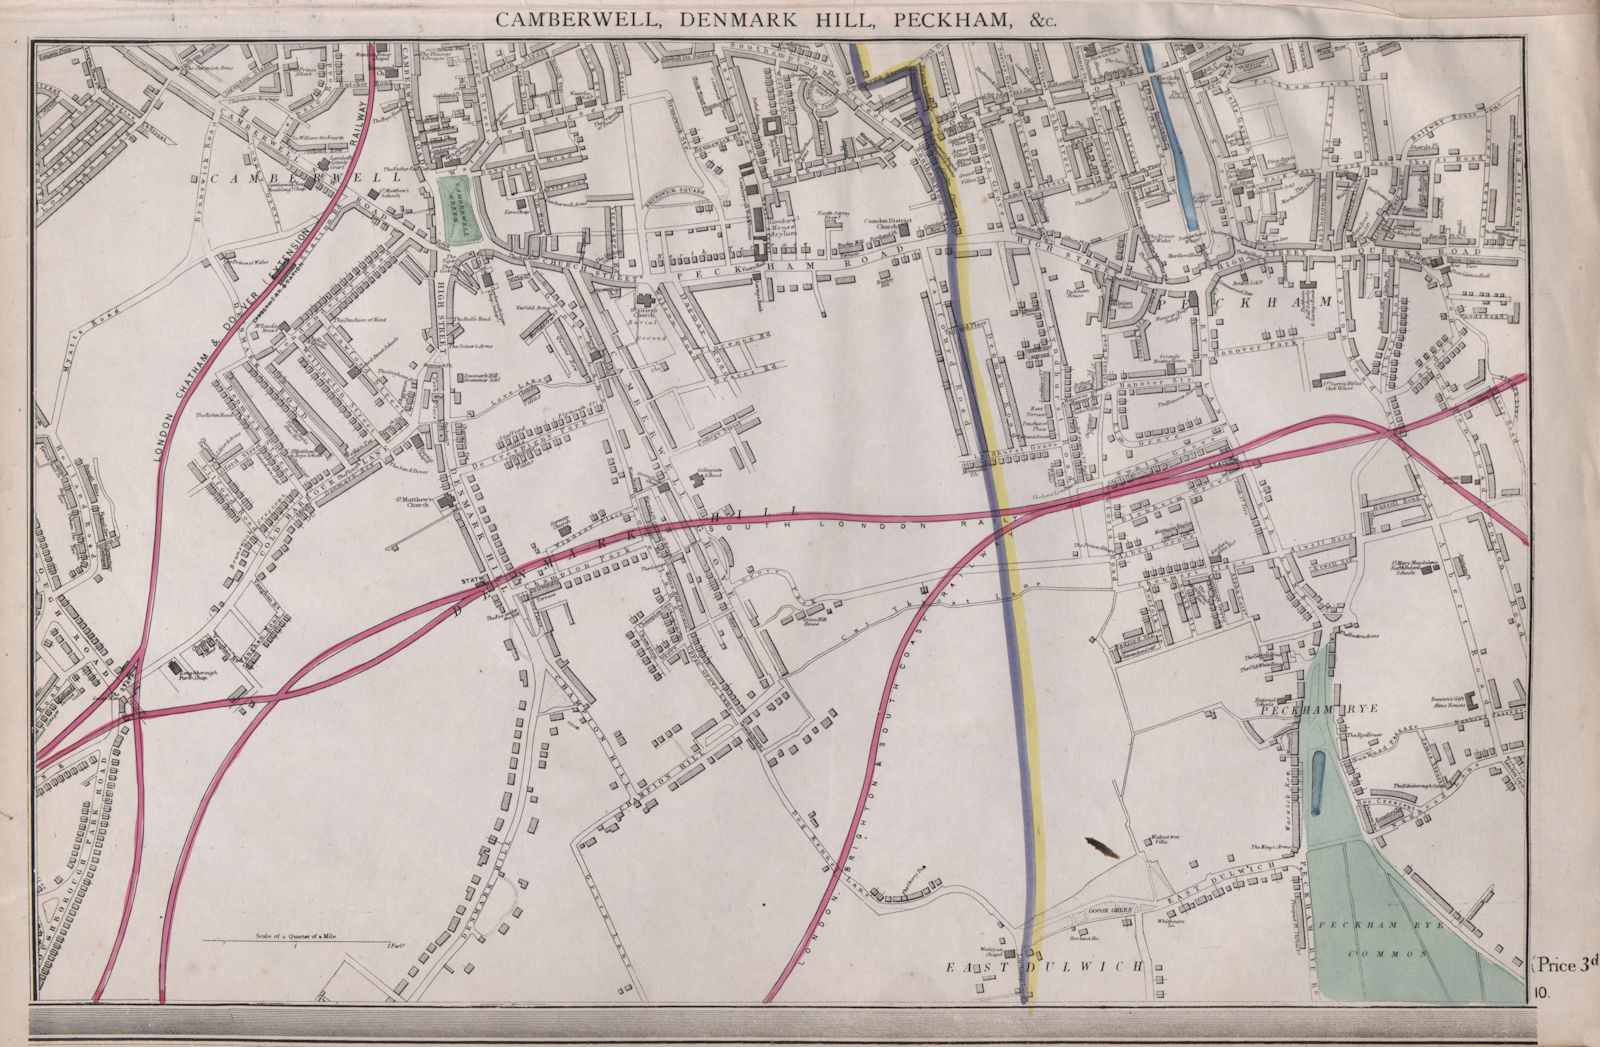 SOUTH LONDON. Peckham/Rye East Dulwich Camberwell Denmark Hill. WELLER 1868 map